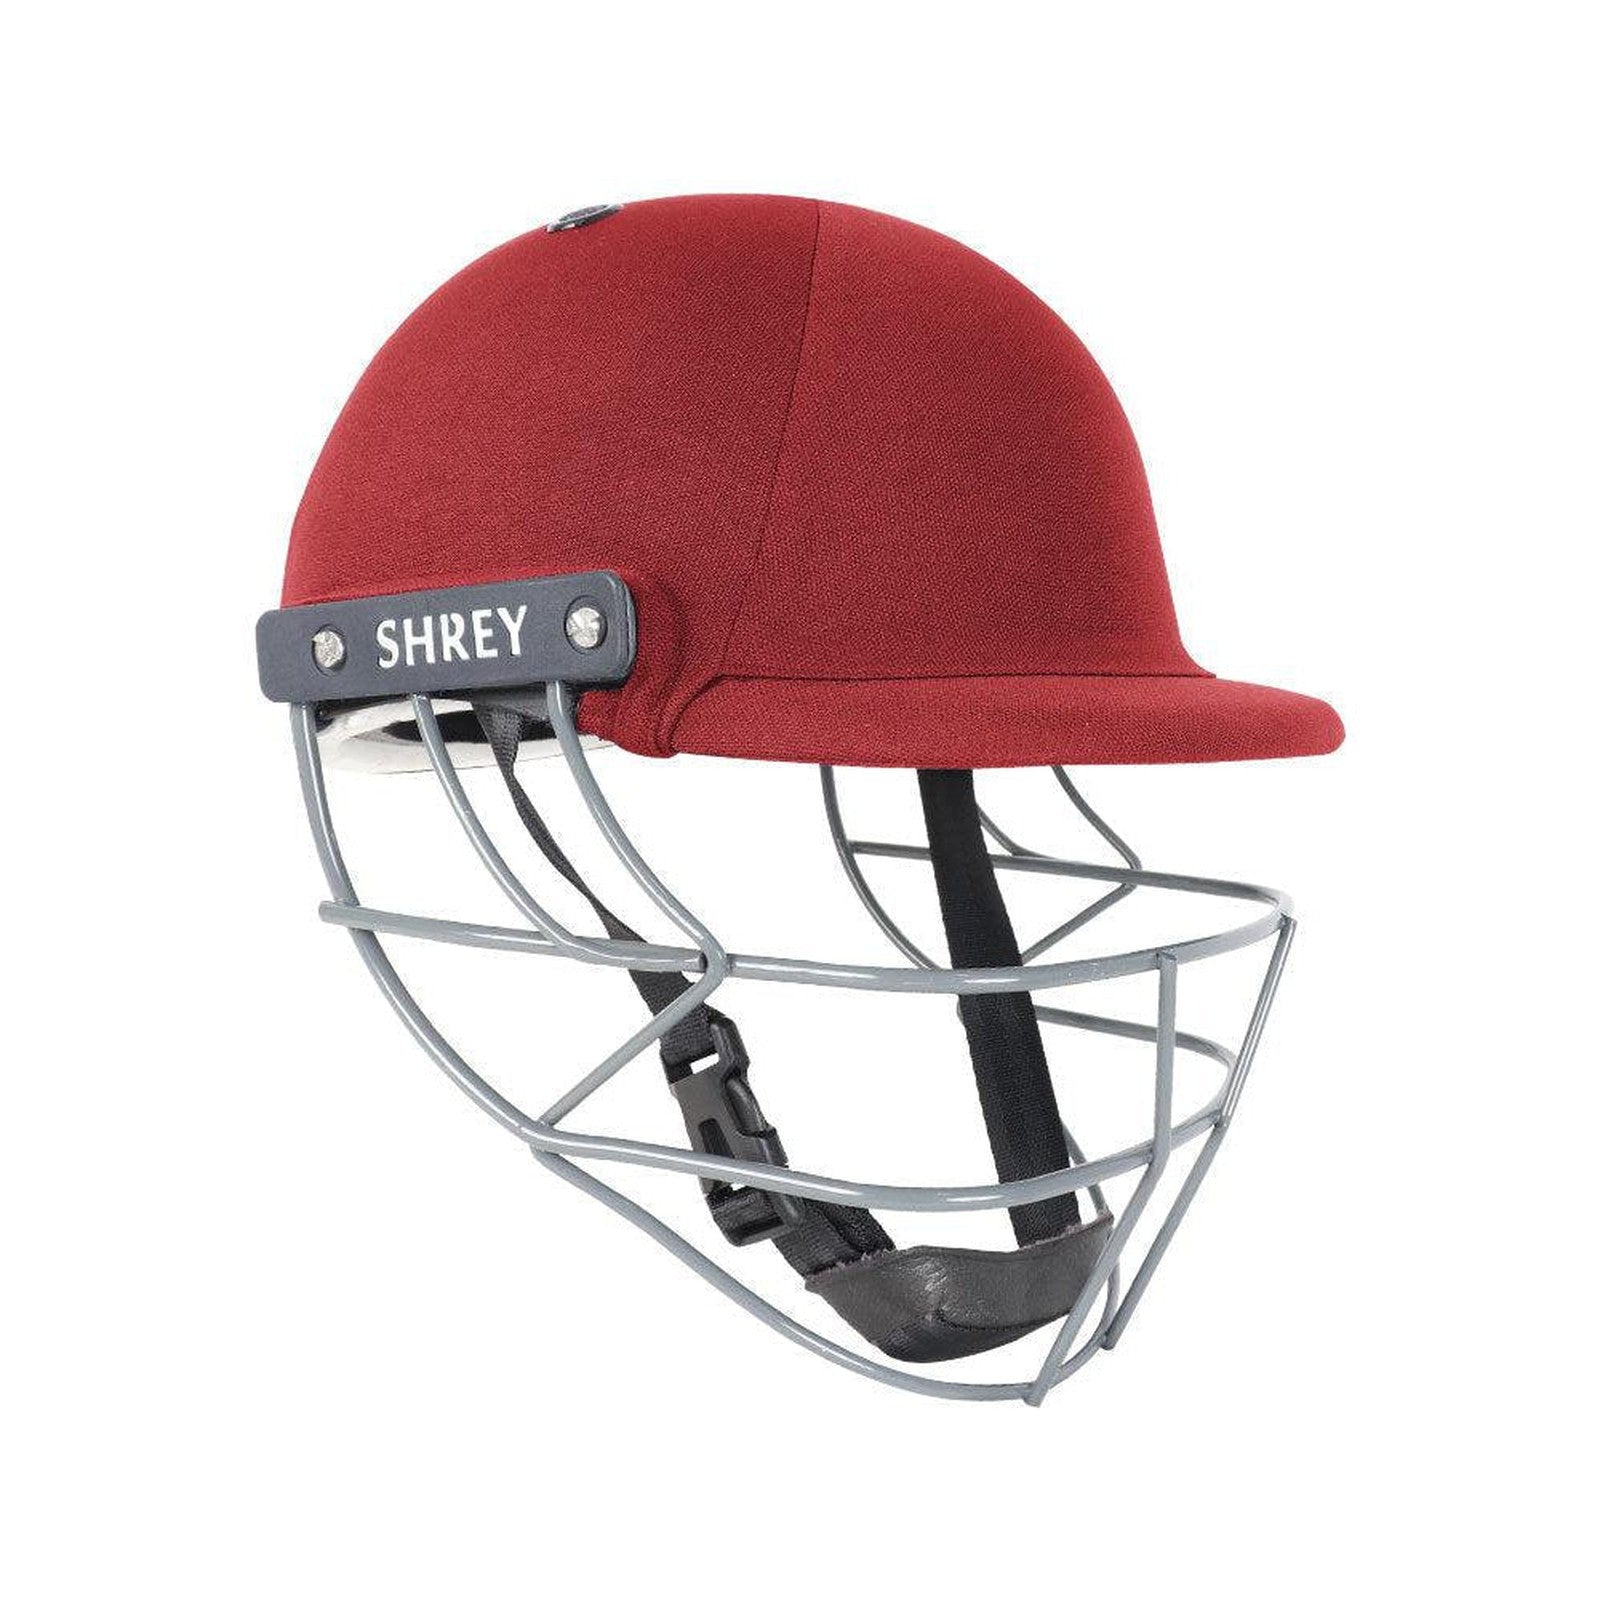 Shrey Performance 2.0 Cricket Helmet With Mild Steel - Maroon Junior